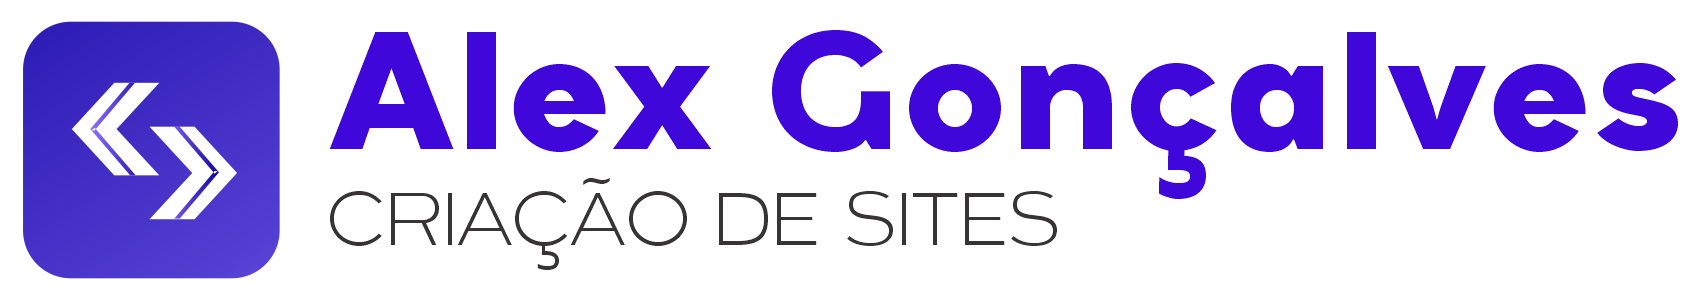 Logo - Alex Gonçalves